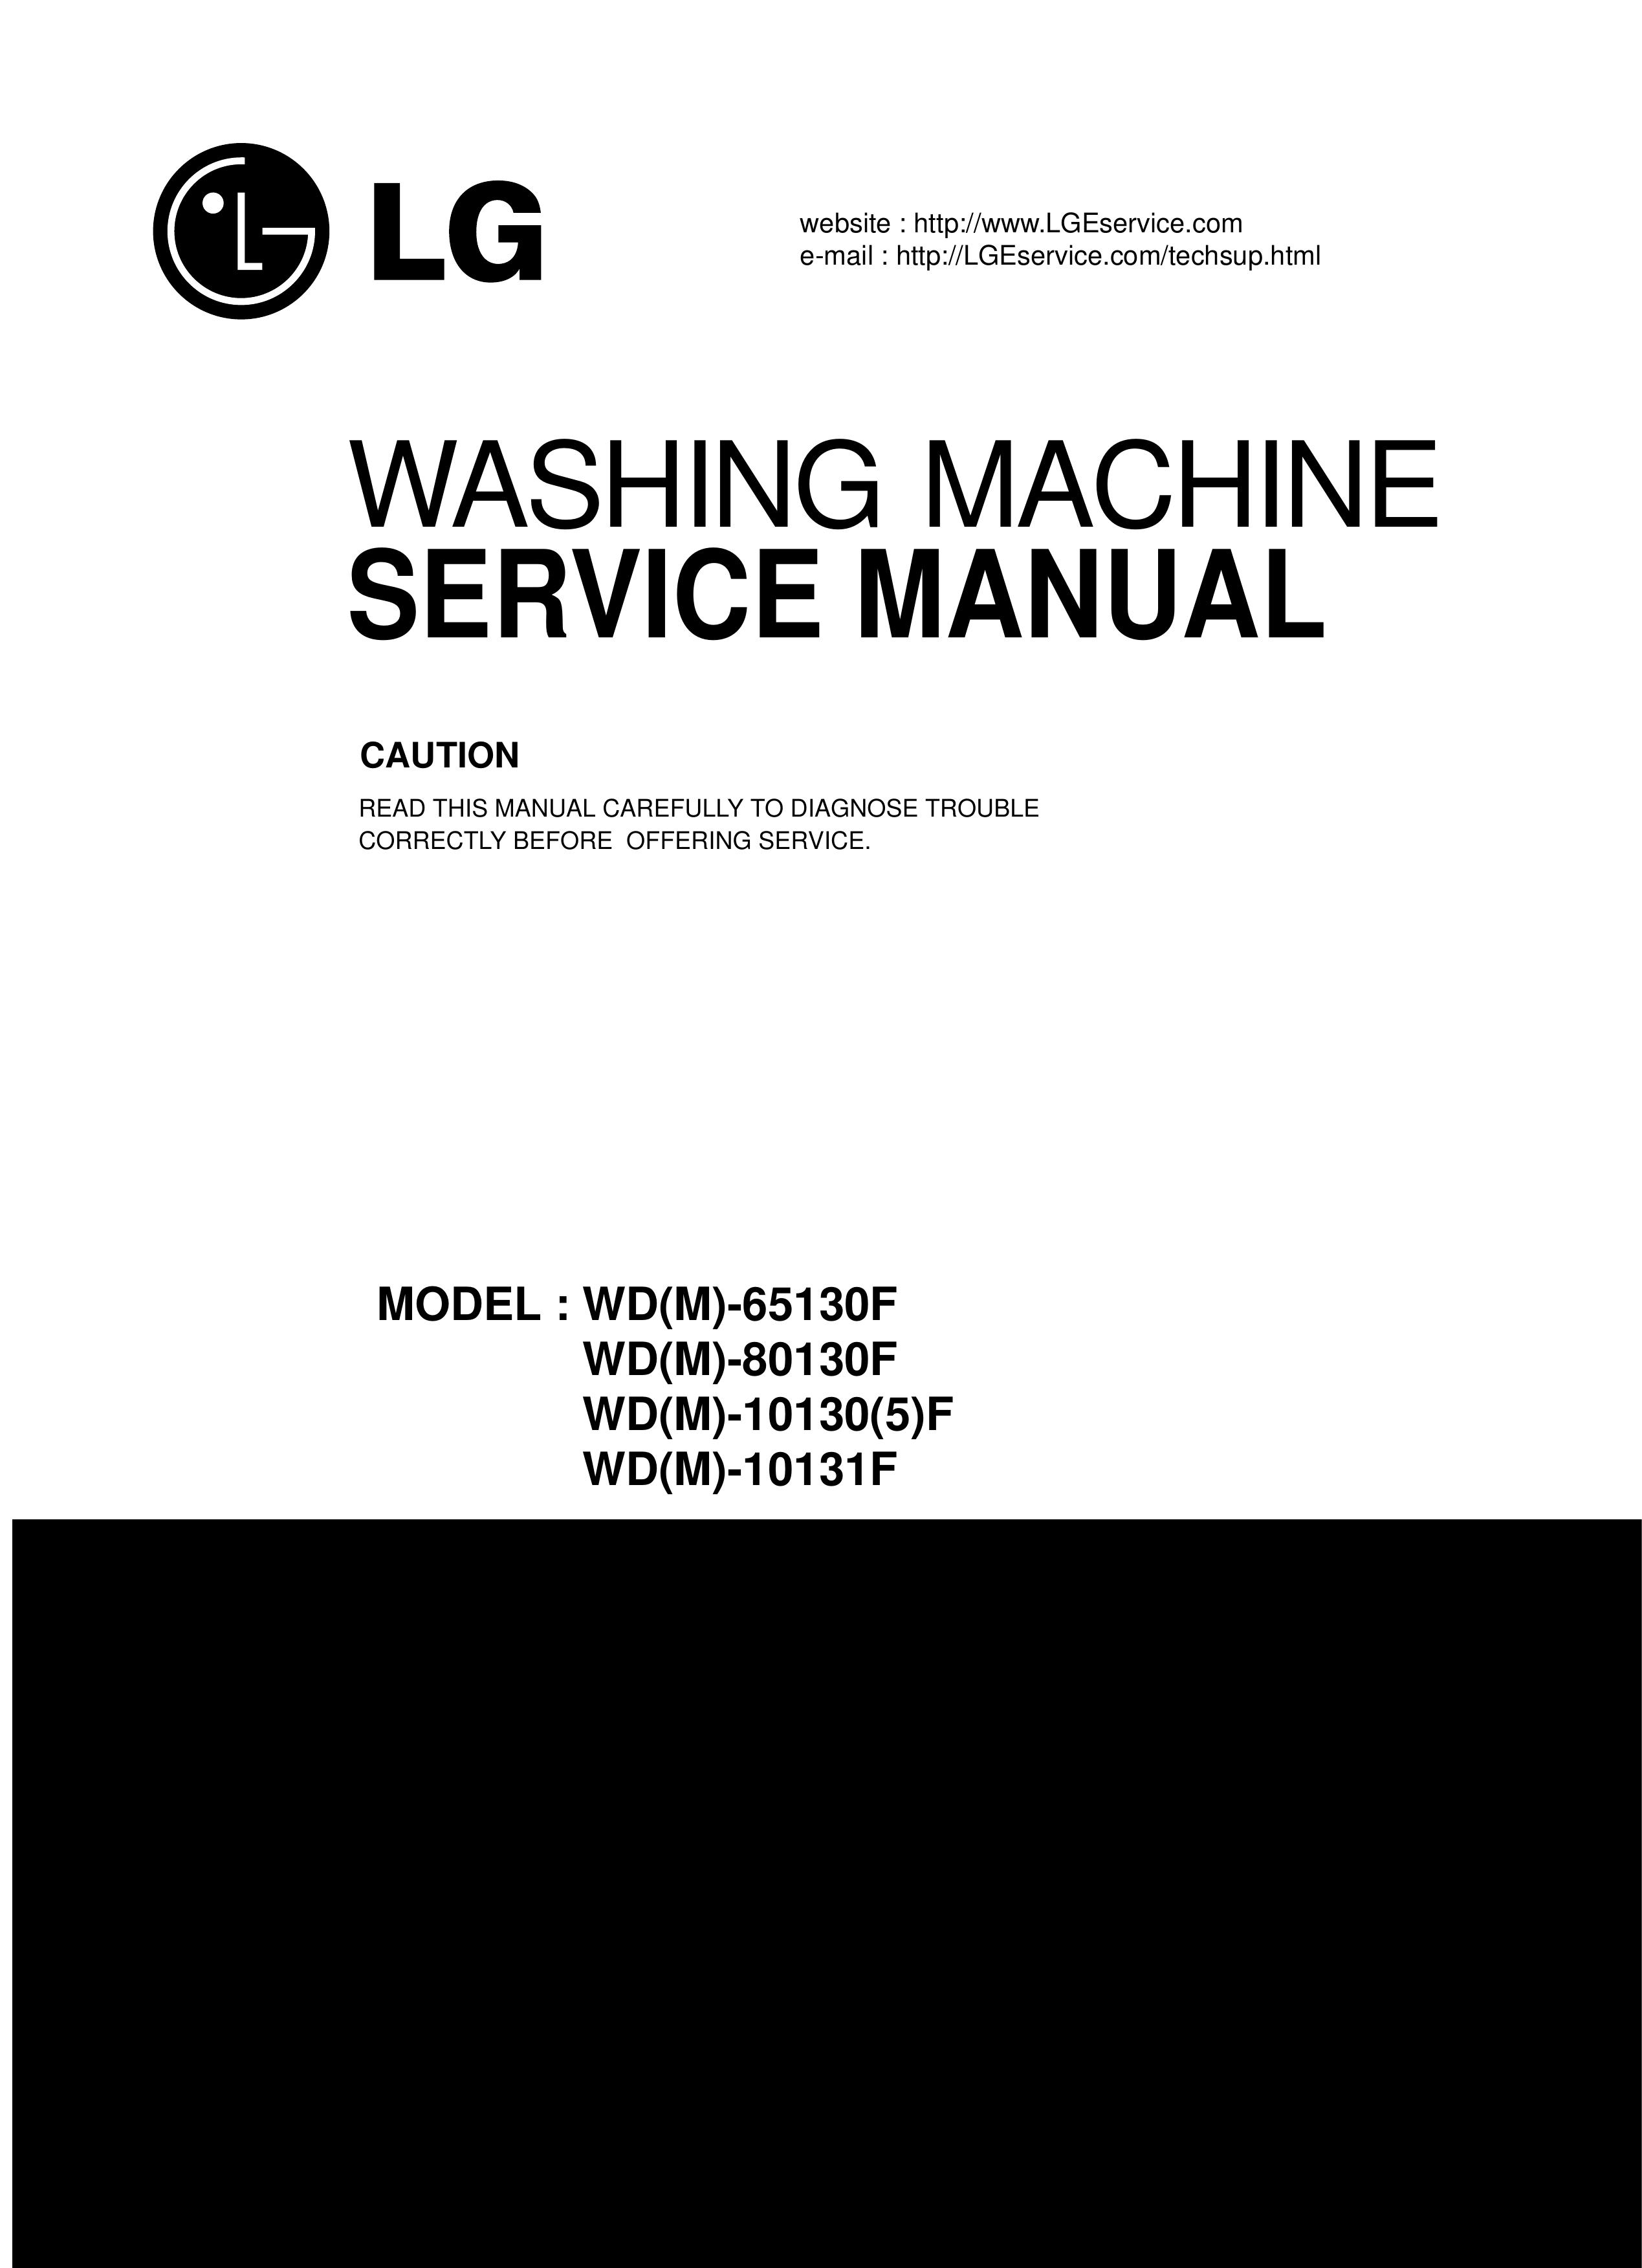 LG Electronics WD(M)-65130F Washer User Manual